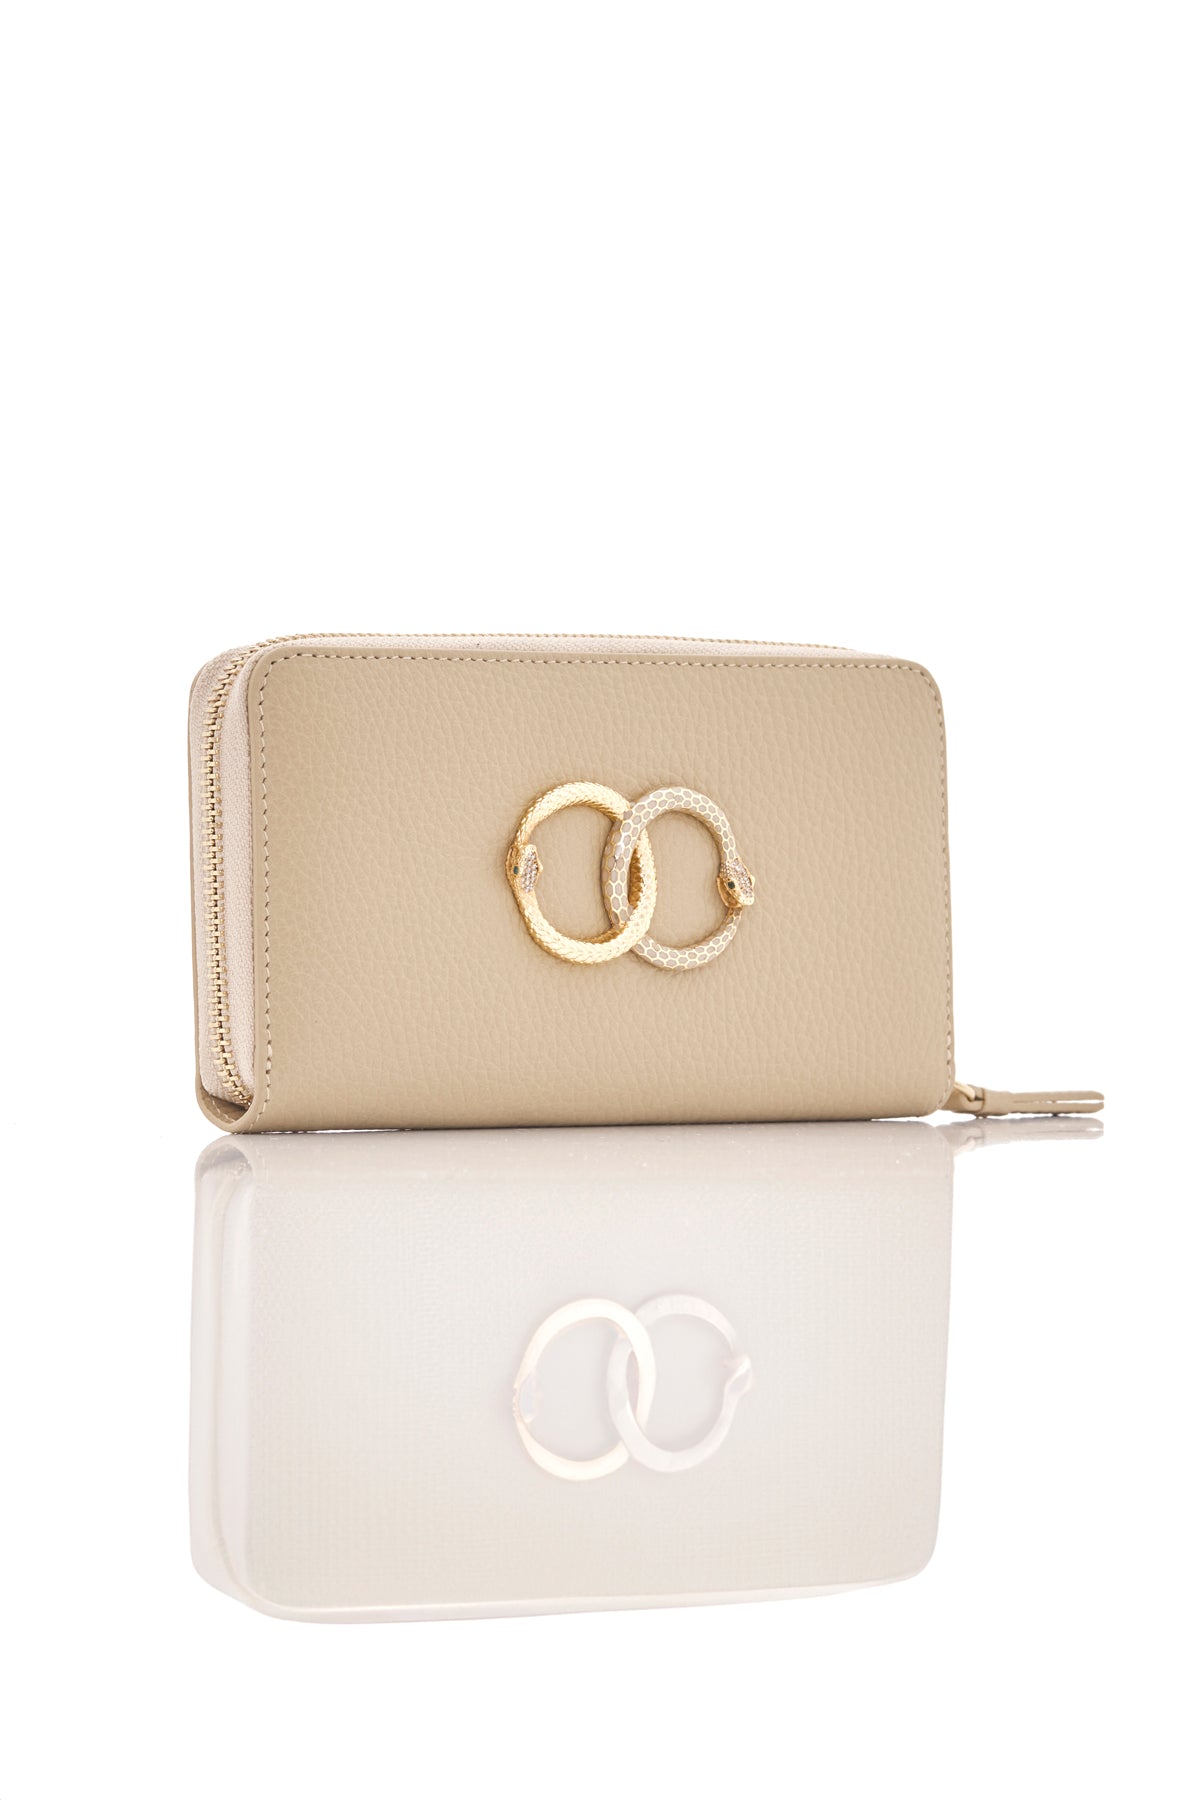 beige sand ouroboros genuine leather women's wallet side